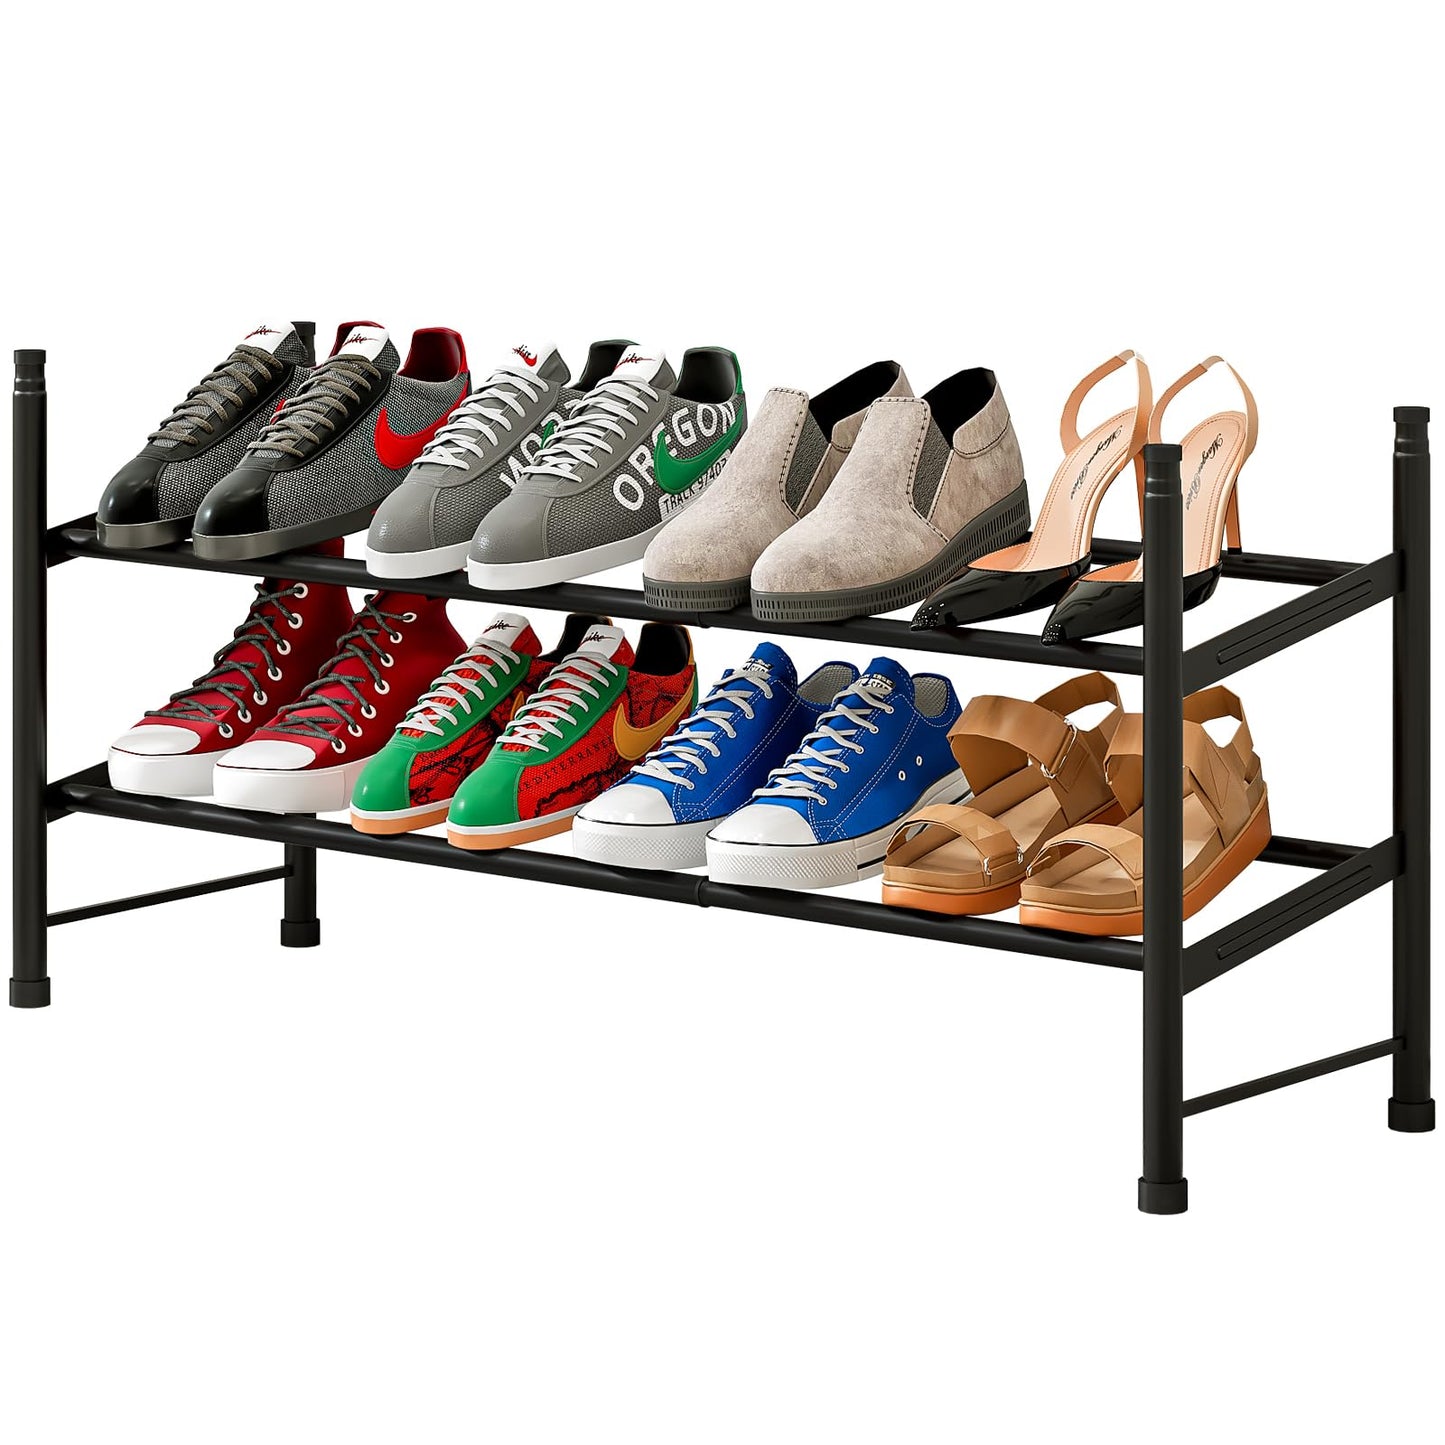 Linzinar Shoe Rack 2 Tier Metal Expandable Adjustable Shoe Shelf